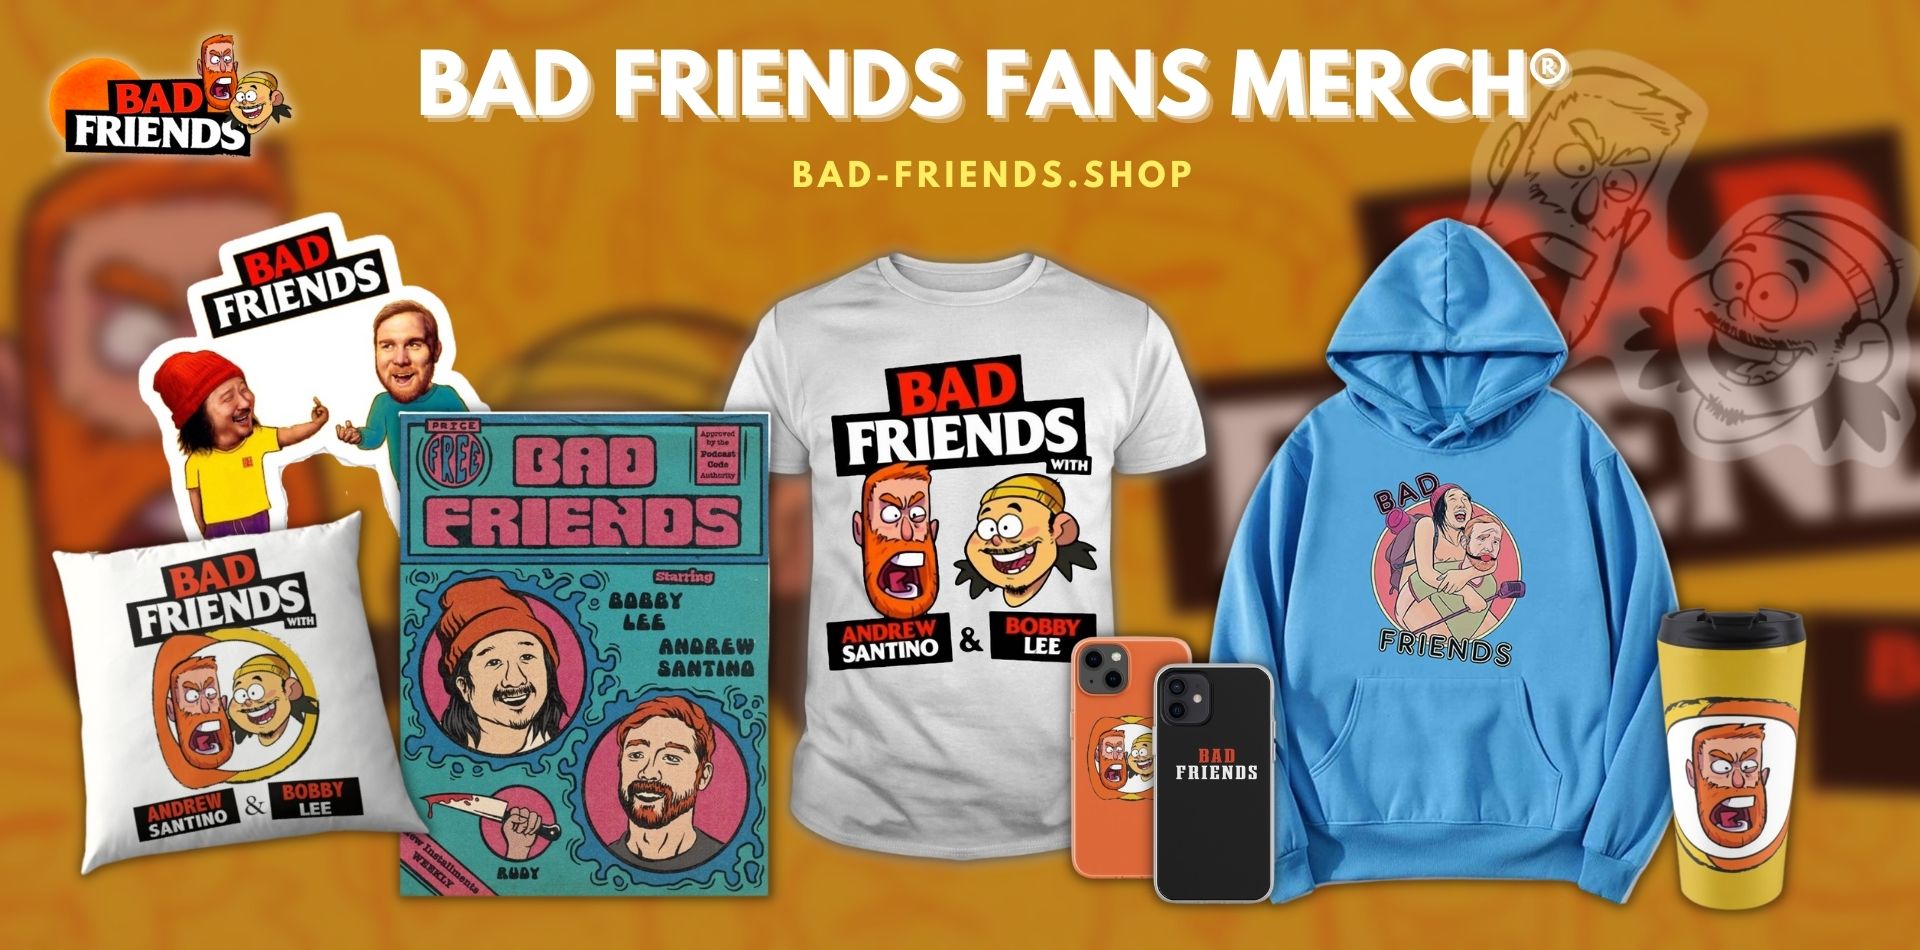 Bad Friends Web Banner - Bad Friends Shop